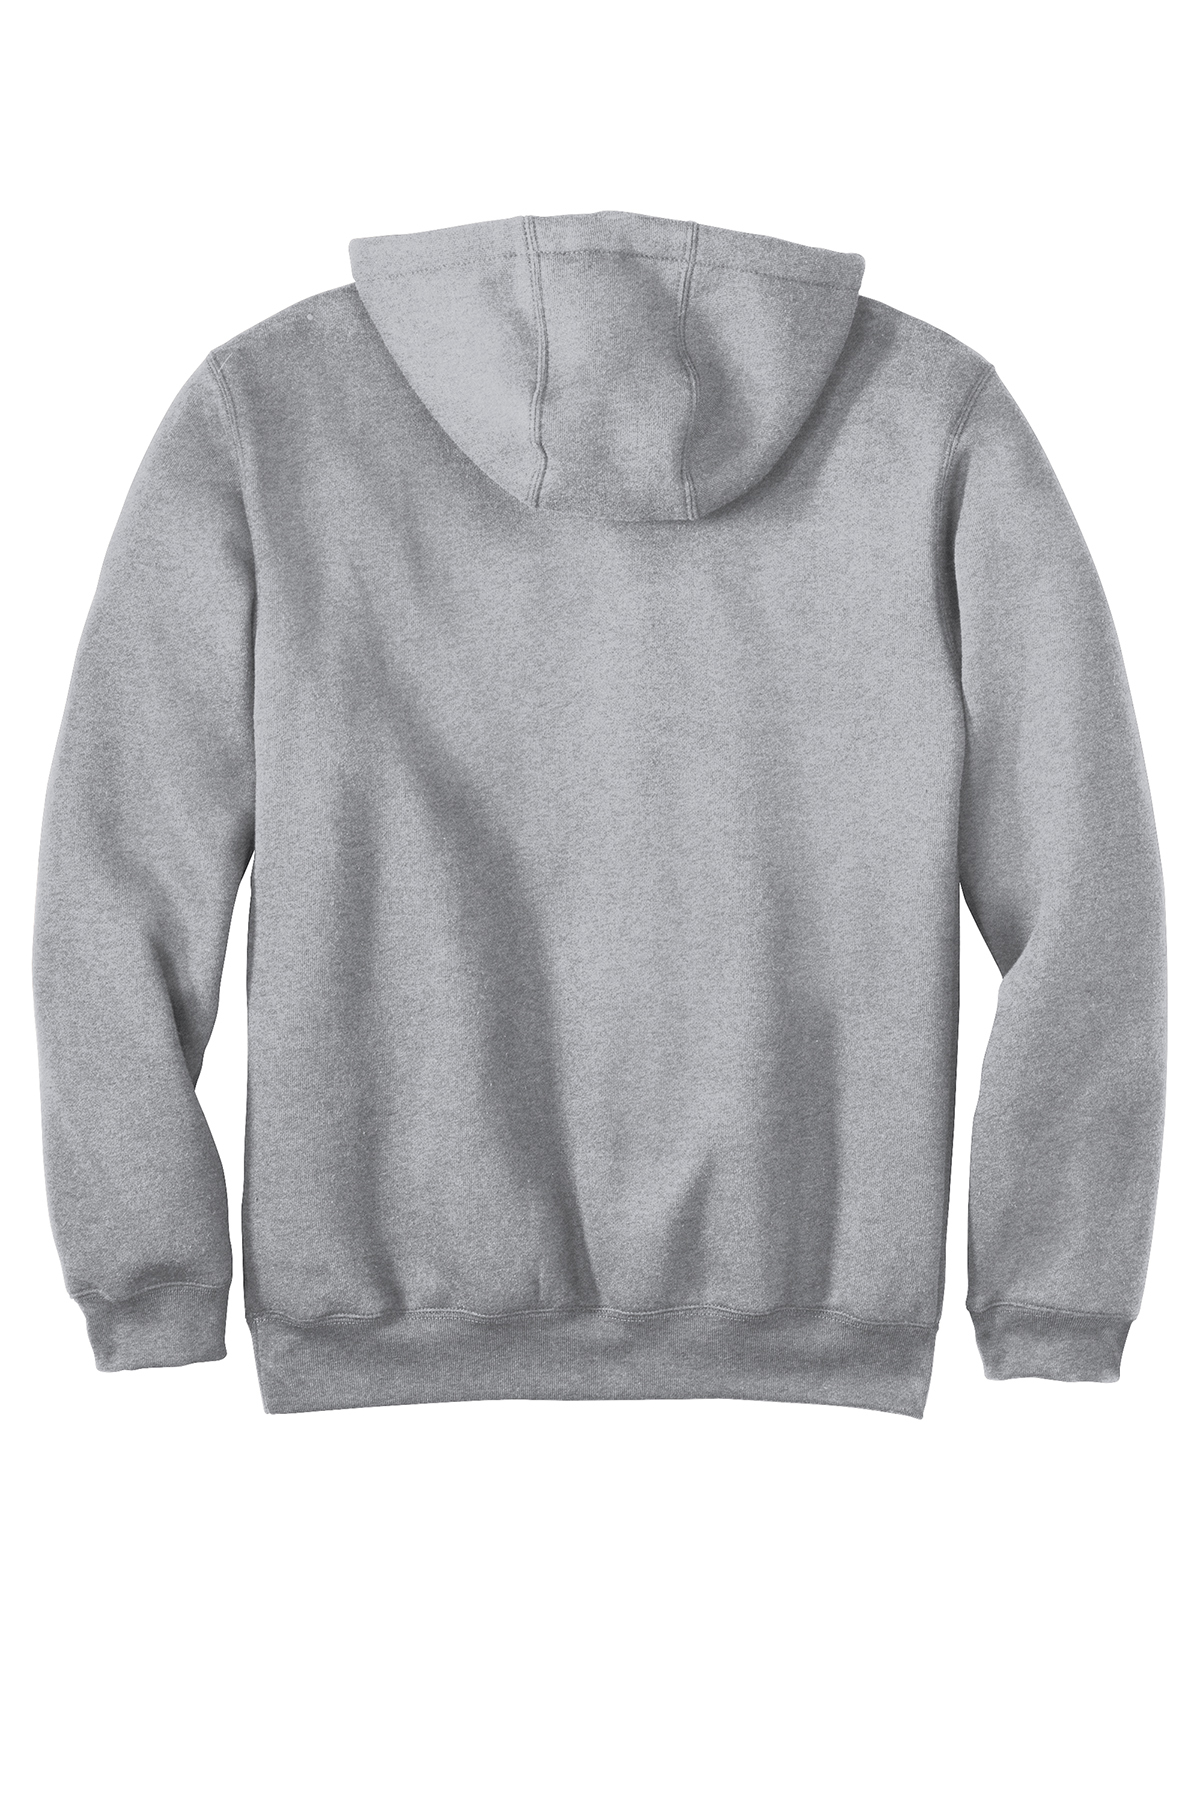 Carhartt Midweight Hooded Sweatshirt, Product